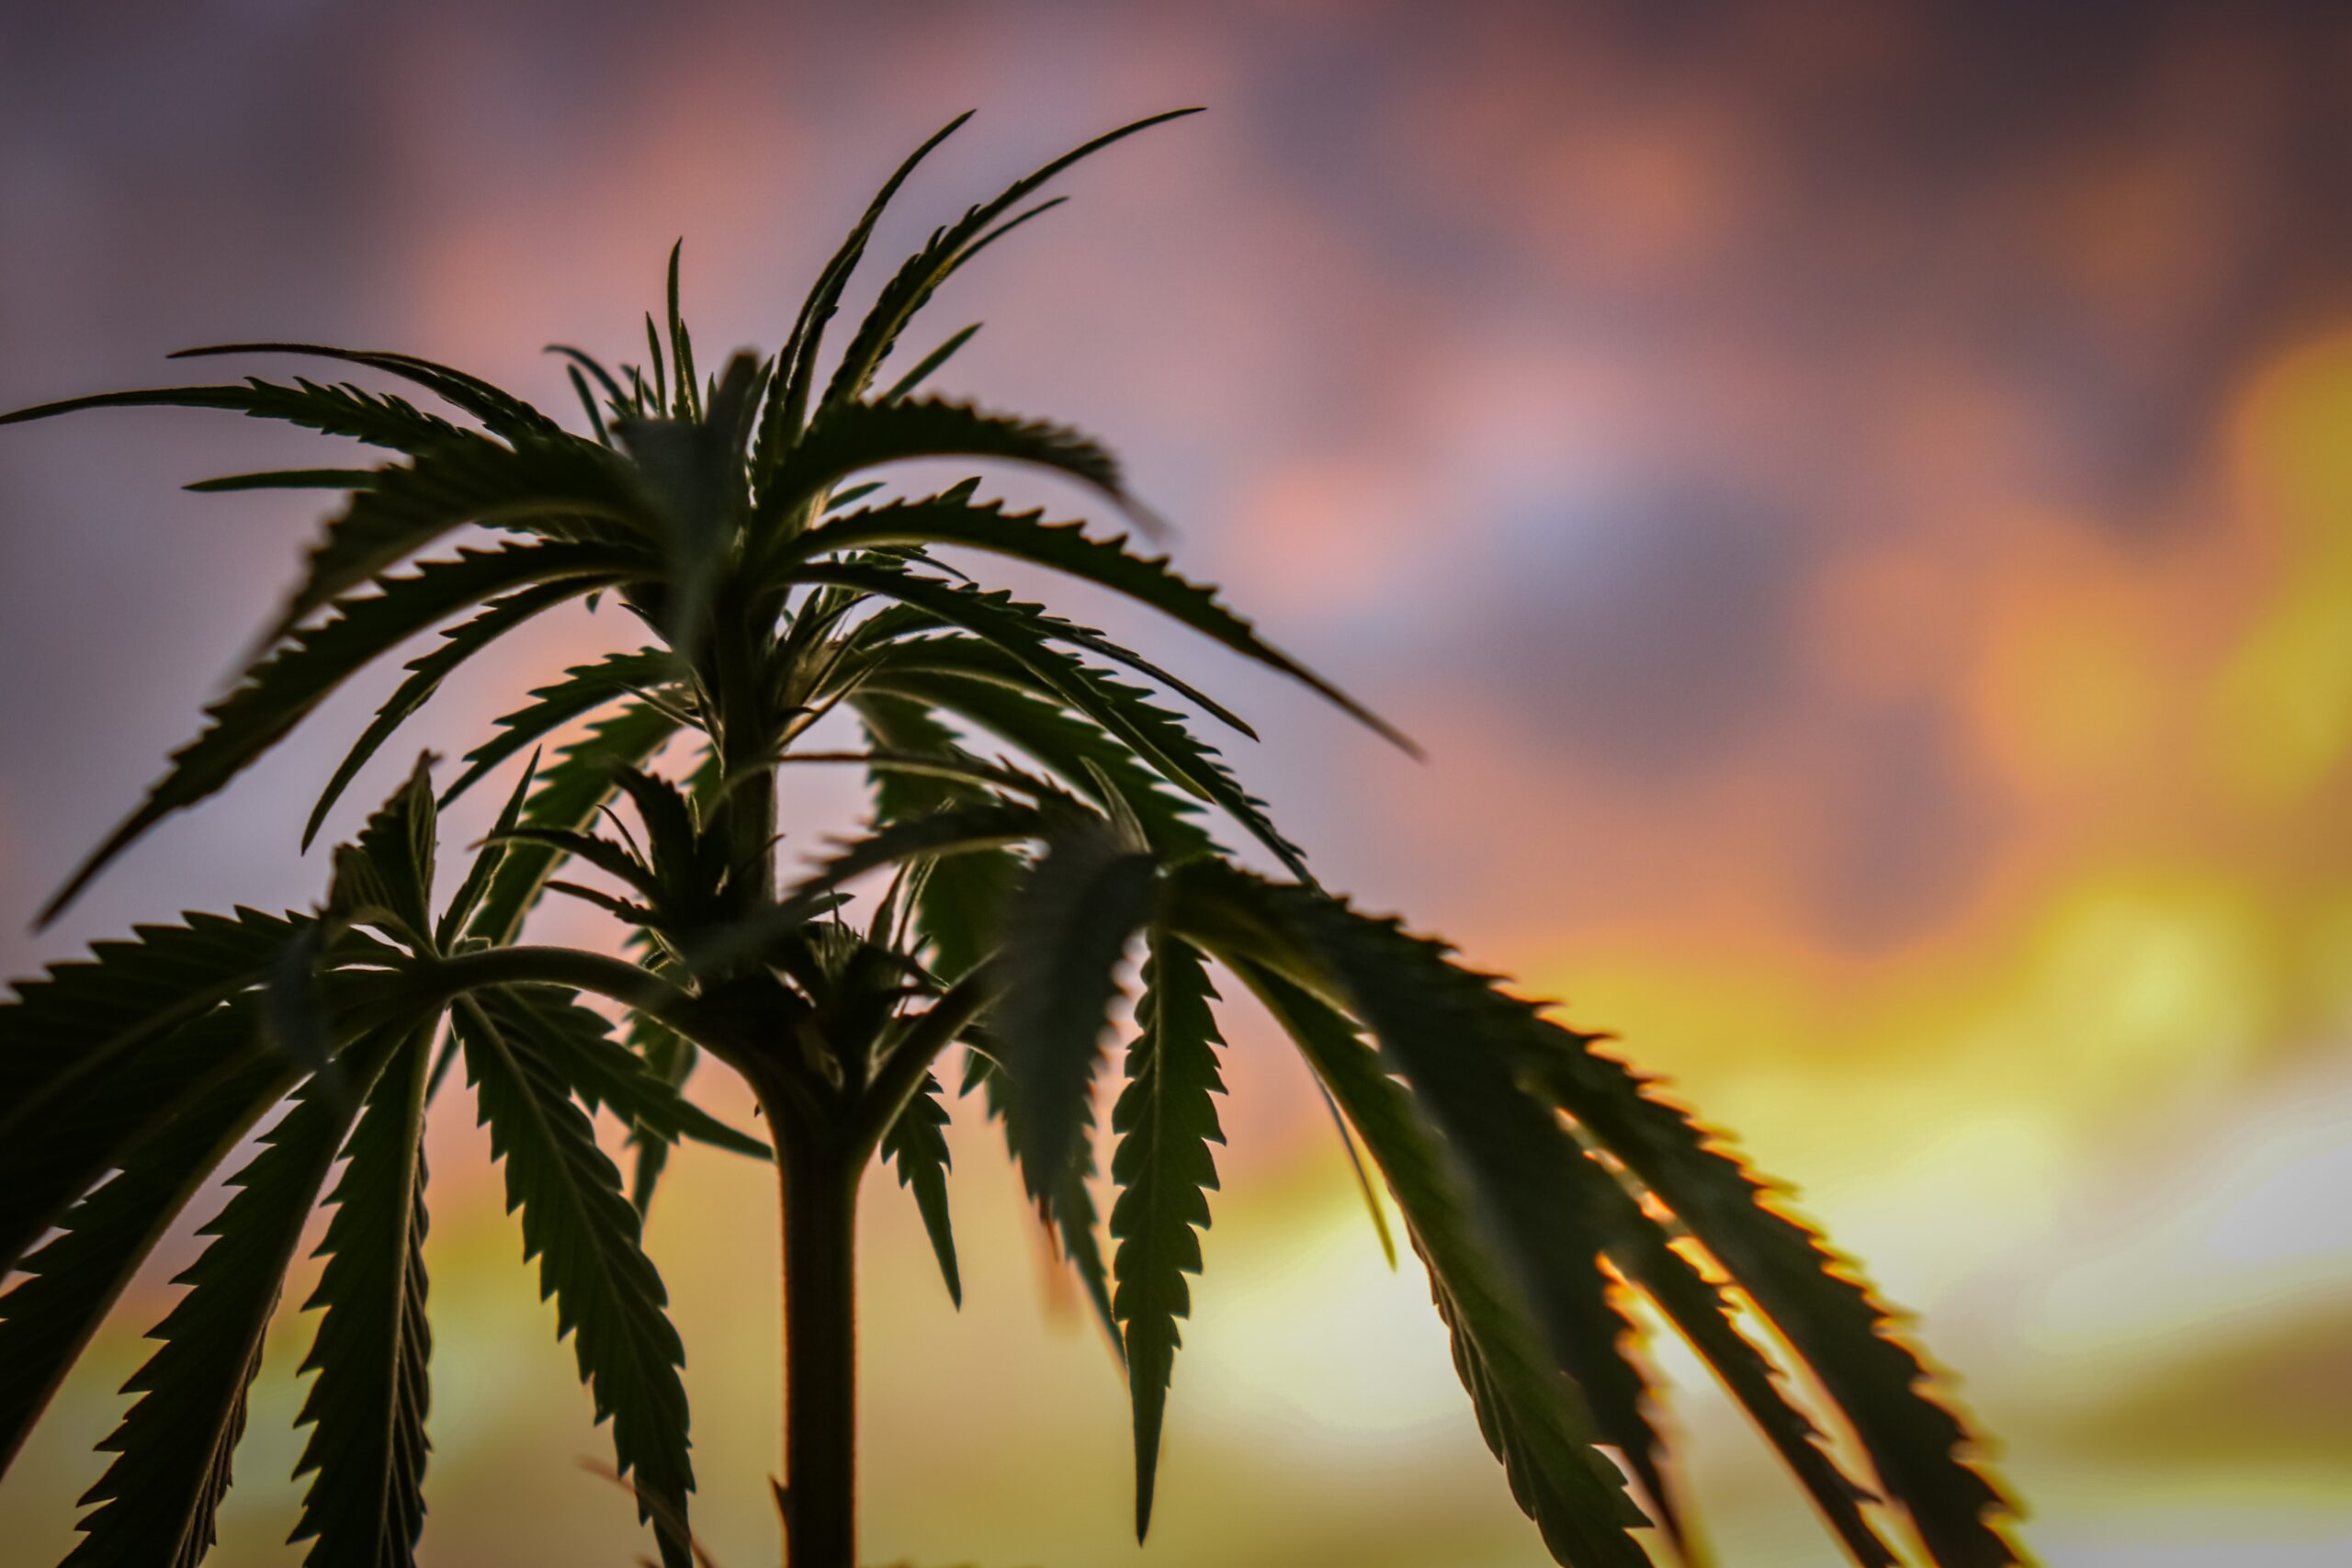 OPINION: Florida should legalize recreational marijuana